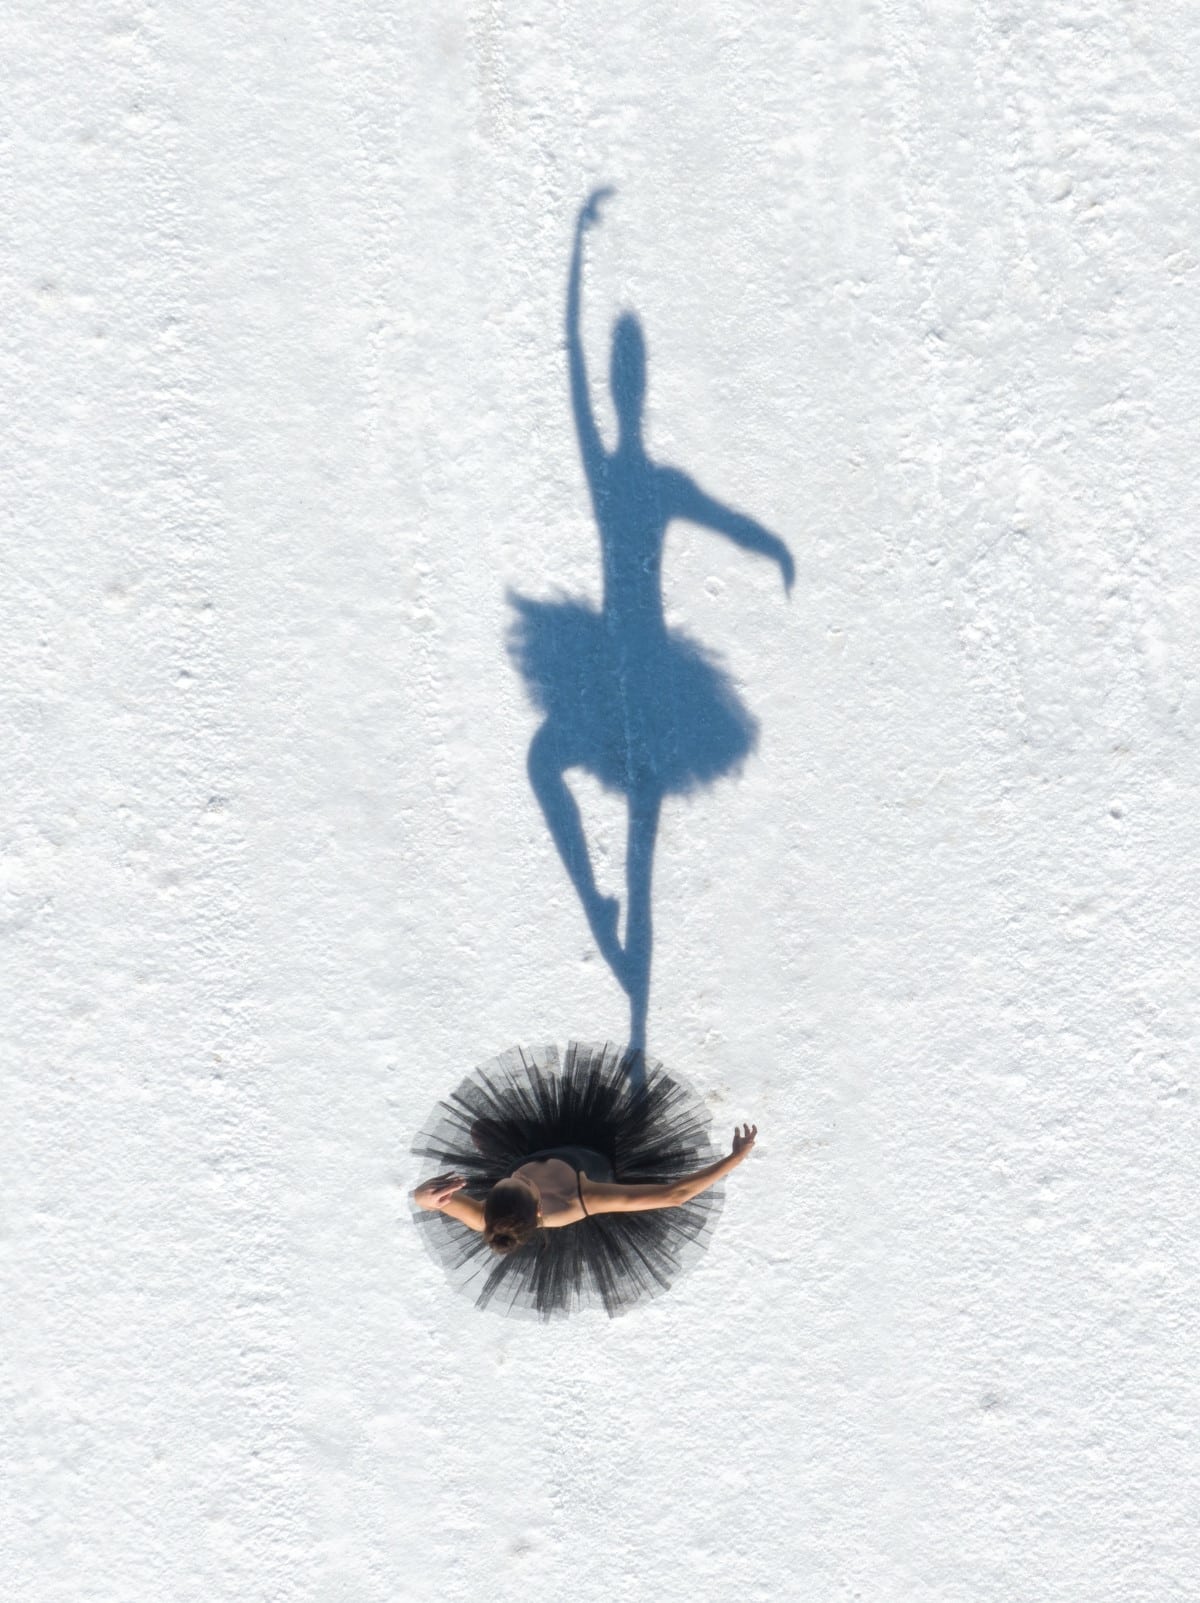 Ballet dancer Sasonah Huttenbach photographed by Brad Walls at Utah's Bonneville Salt Flats